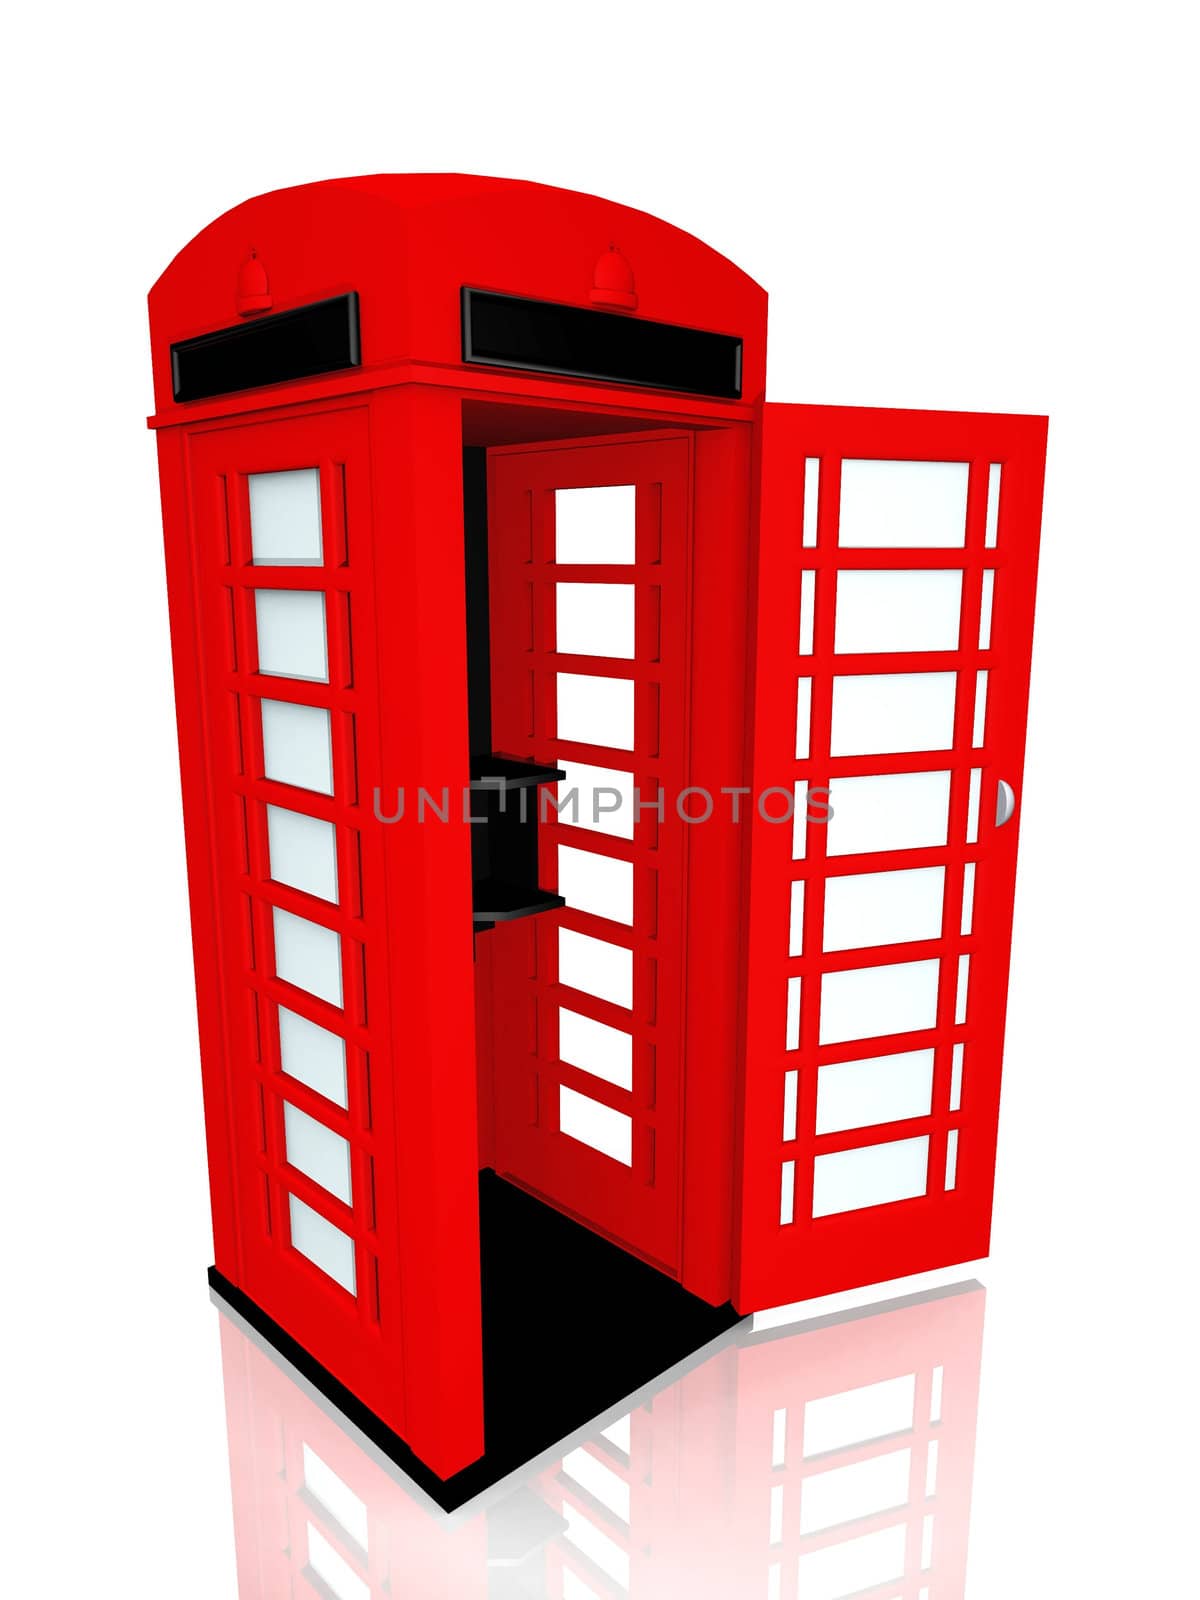 the English red telephone box by njaj